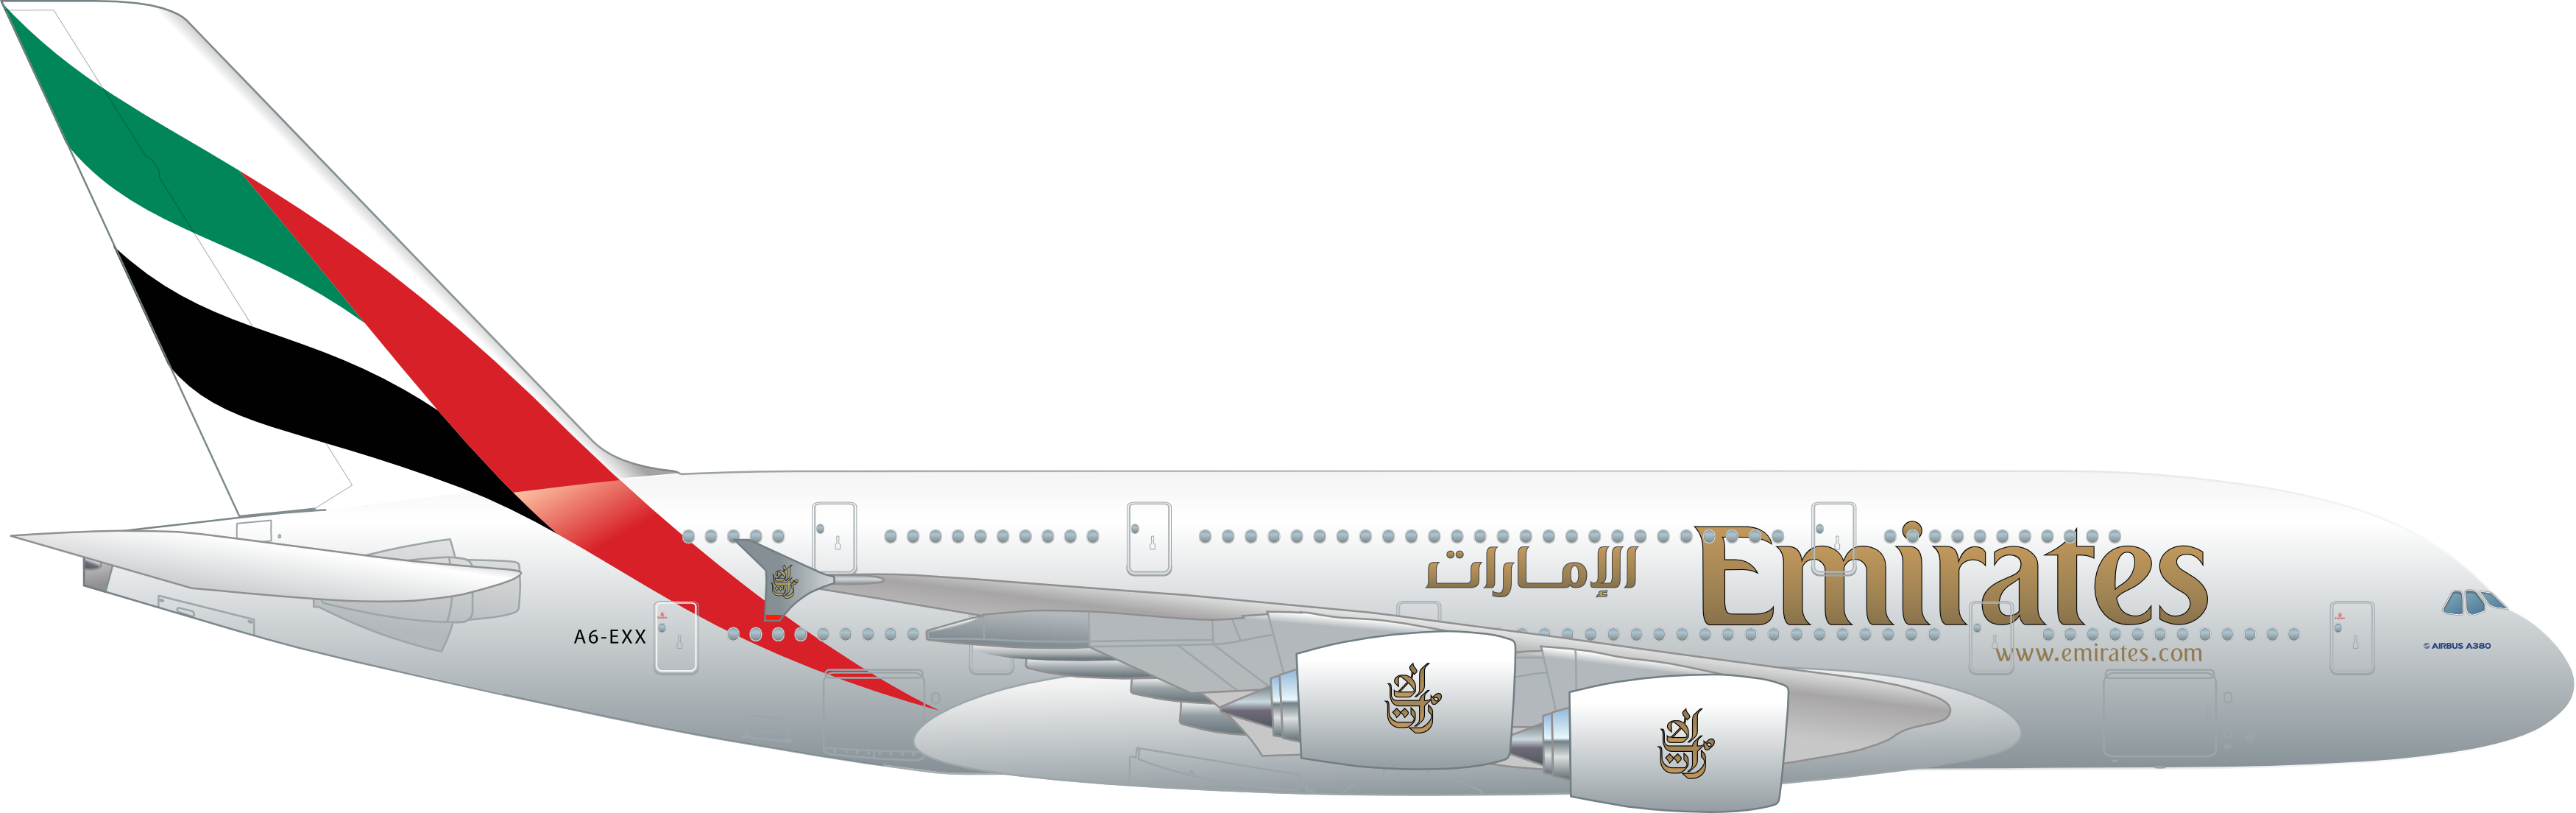 File:Emirates logo old.png